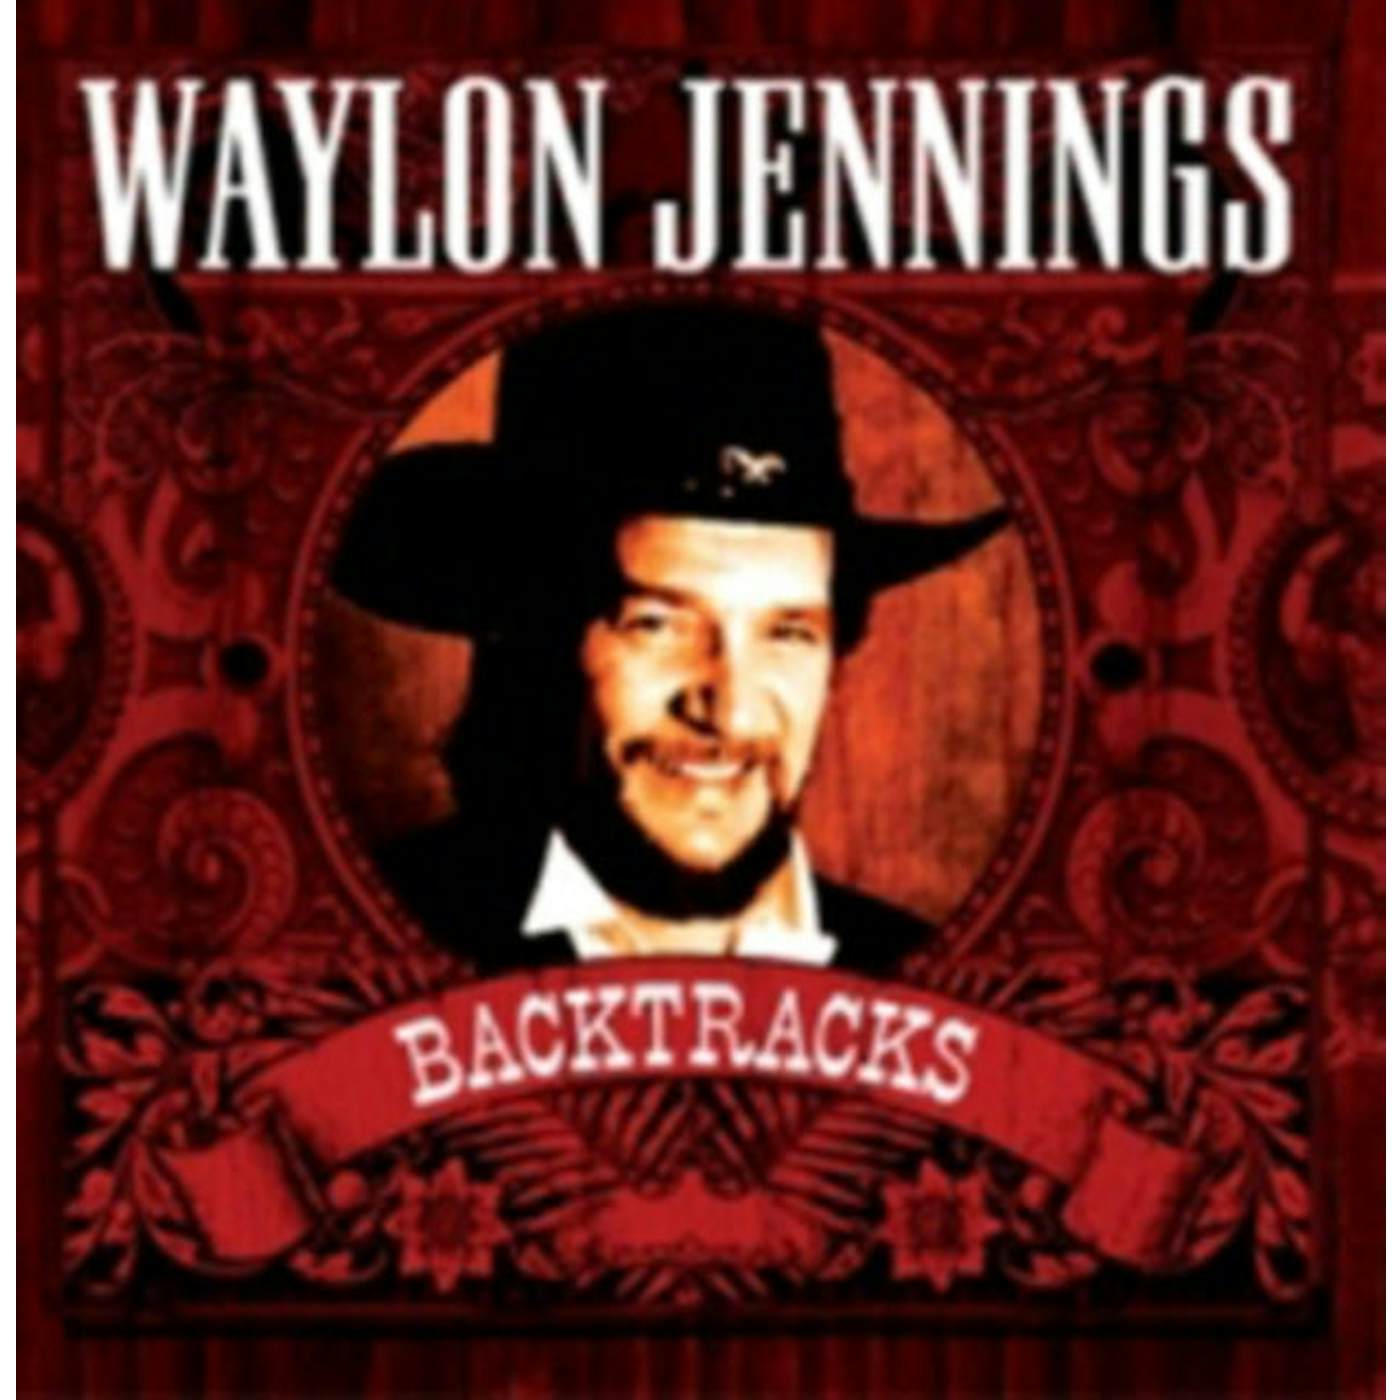 Waylon Jennings CD - Backtracks